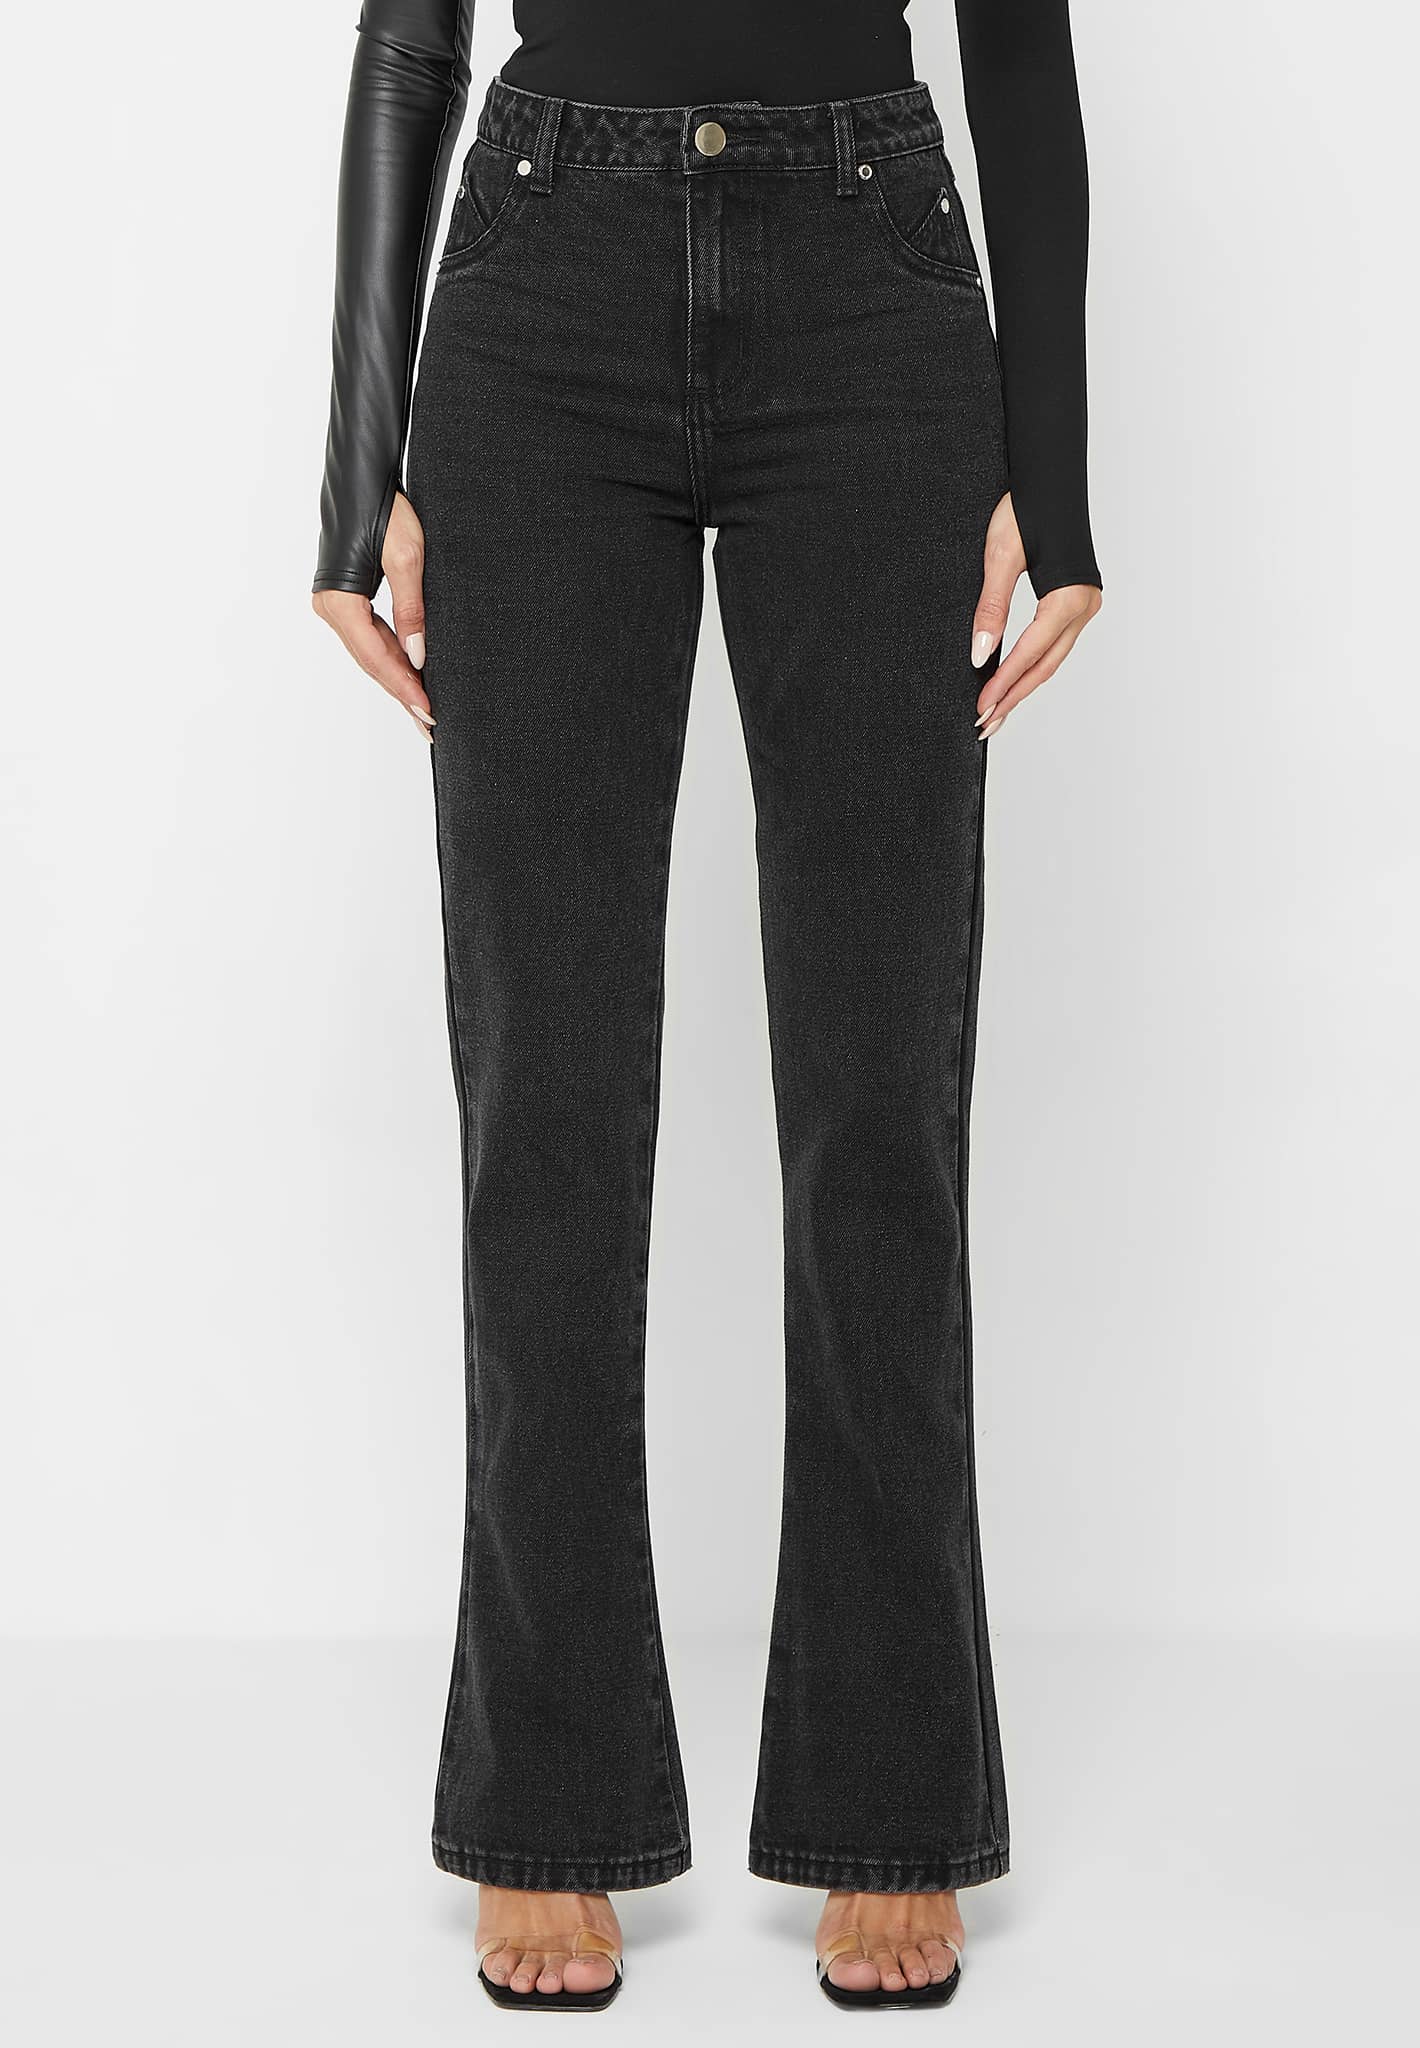 Jeans De Mujer Color Gris Oscuro Denim Streetwear Rompe Agujeros Drinados  Lápiz Mujeres Alta Cintura Pinzón Stretch Pantalones Femme 10398 De 27,42 €